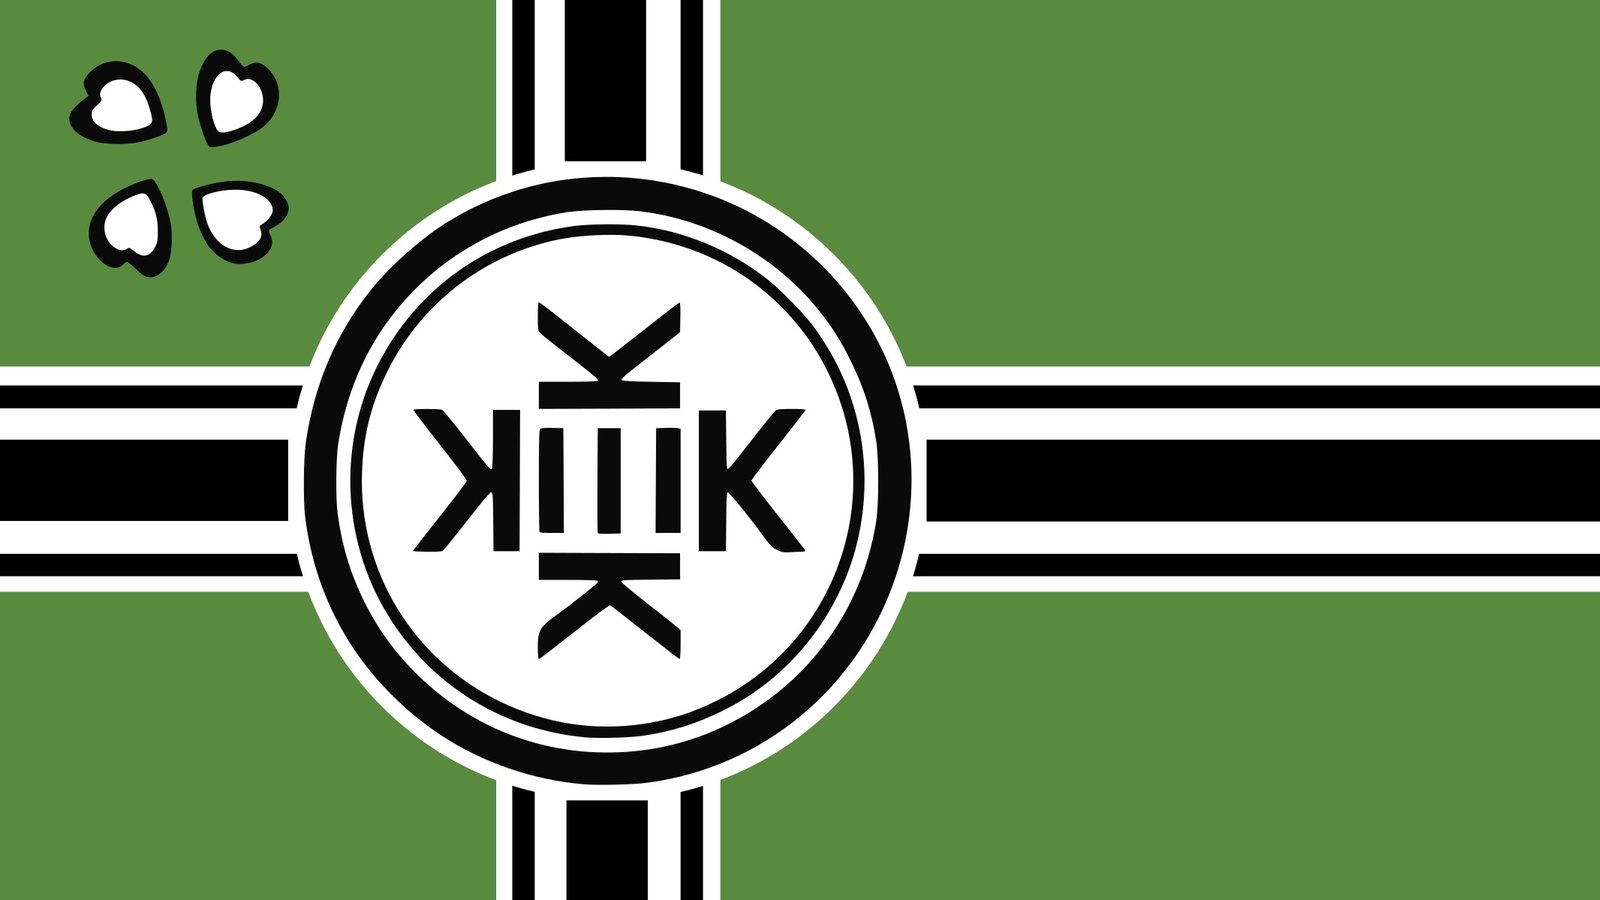 flag of kekistan